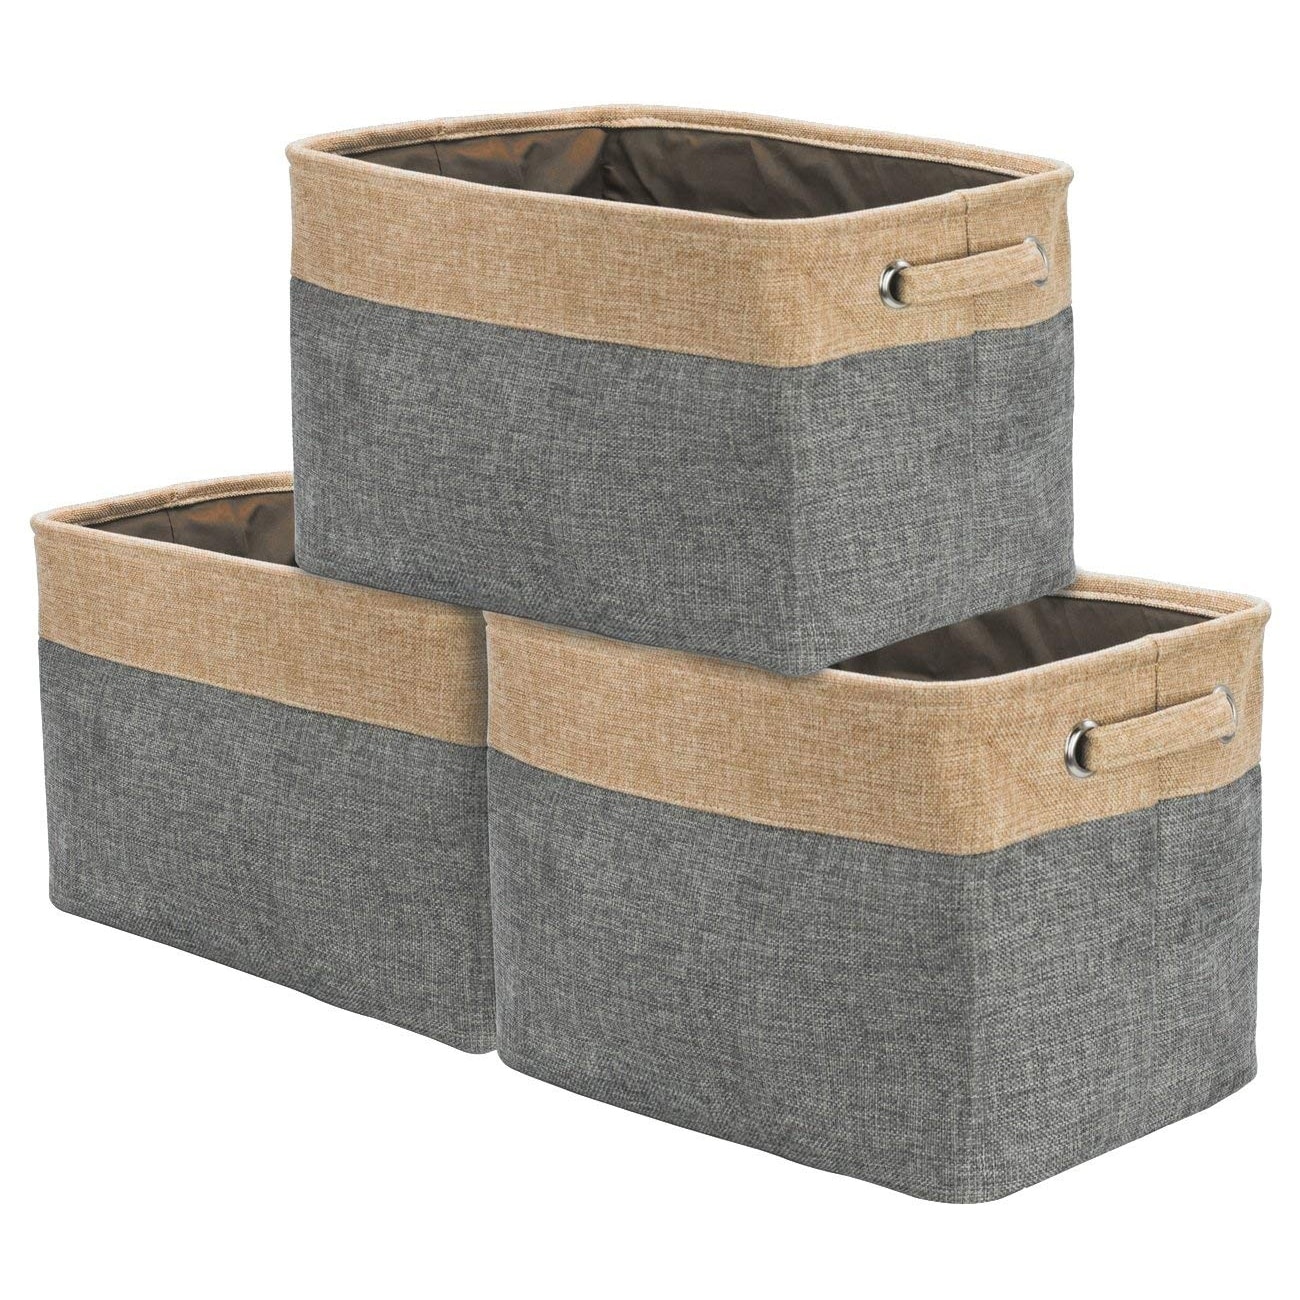 Storage Large Basket Set - Big Rectangular Fabric Collapsible Organizer Bin  Box with Carry Handles (3-Pk Grey/Tan)